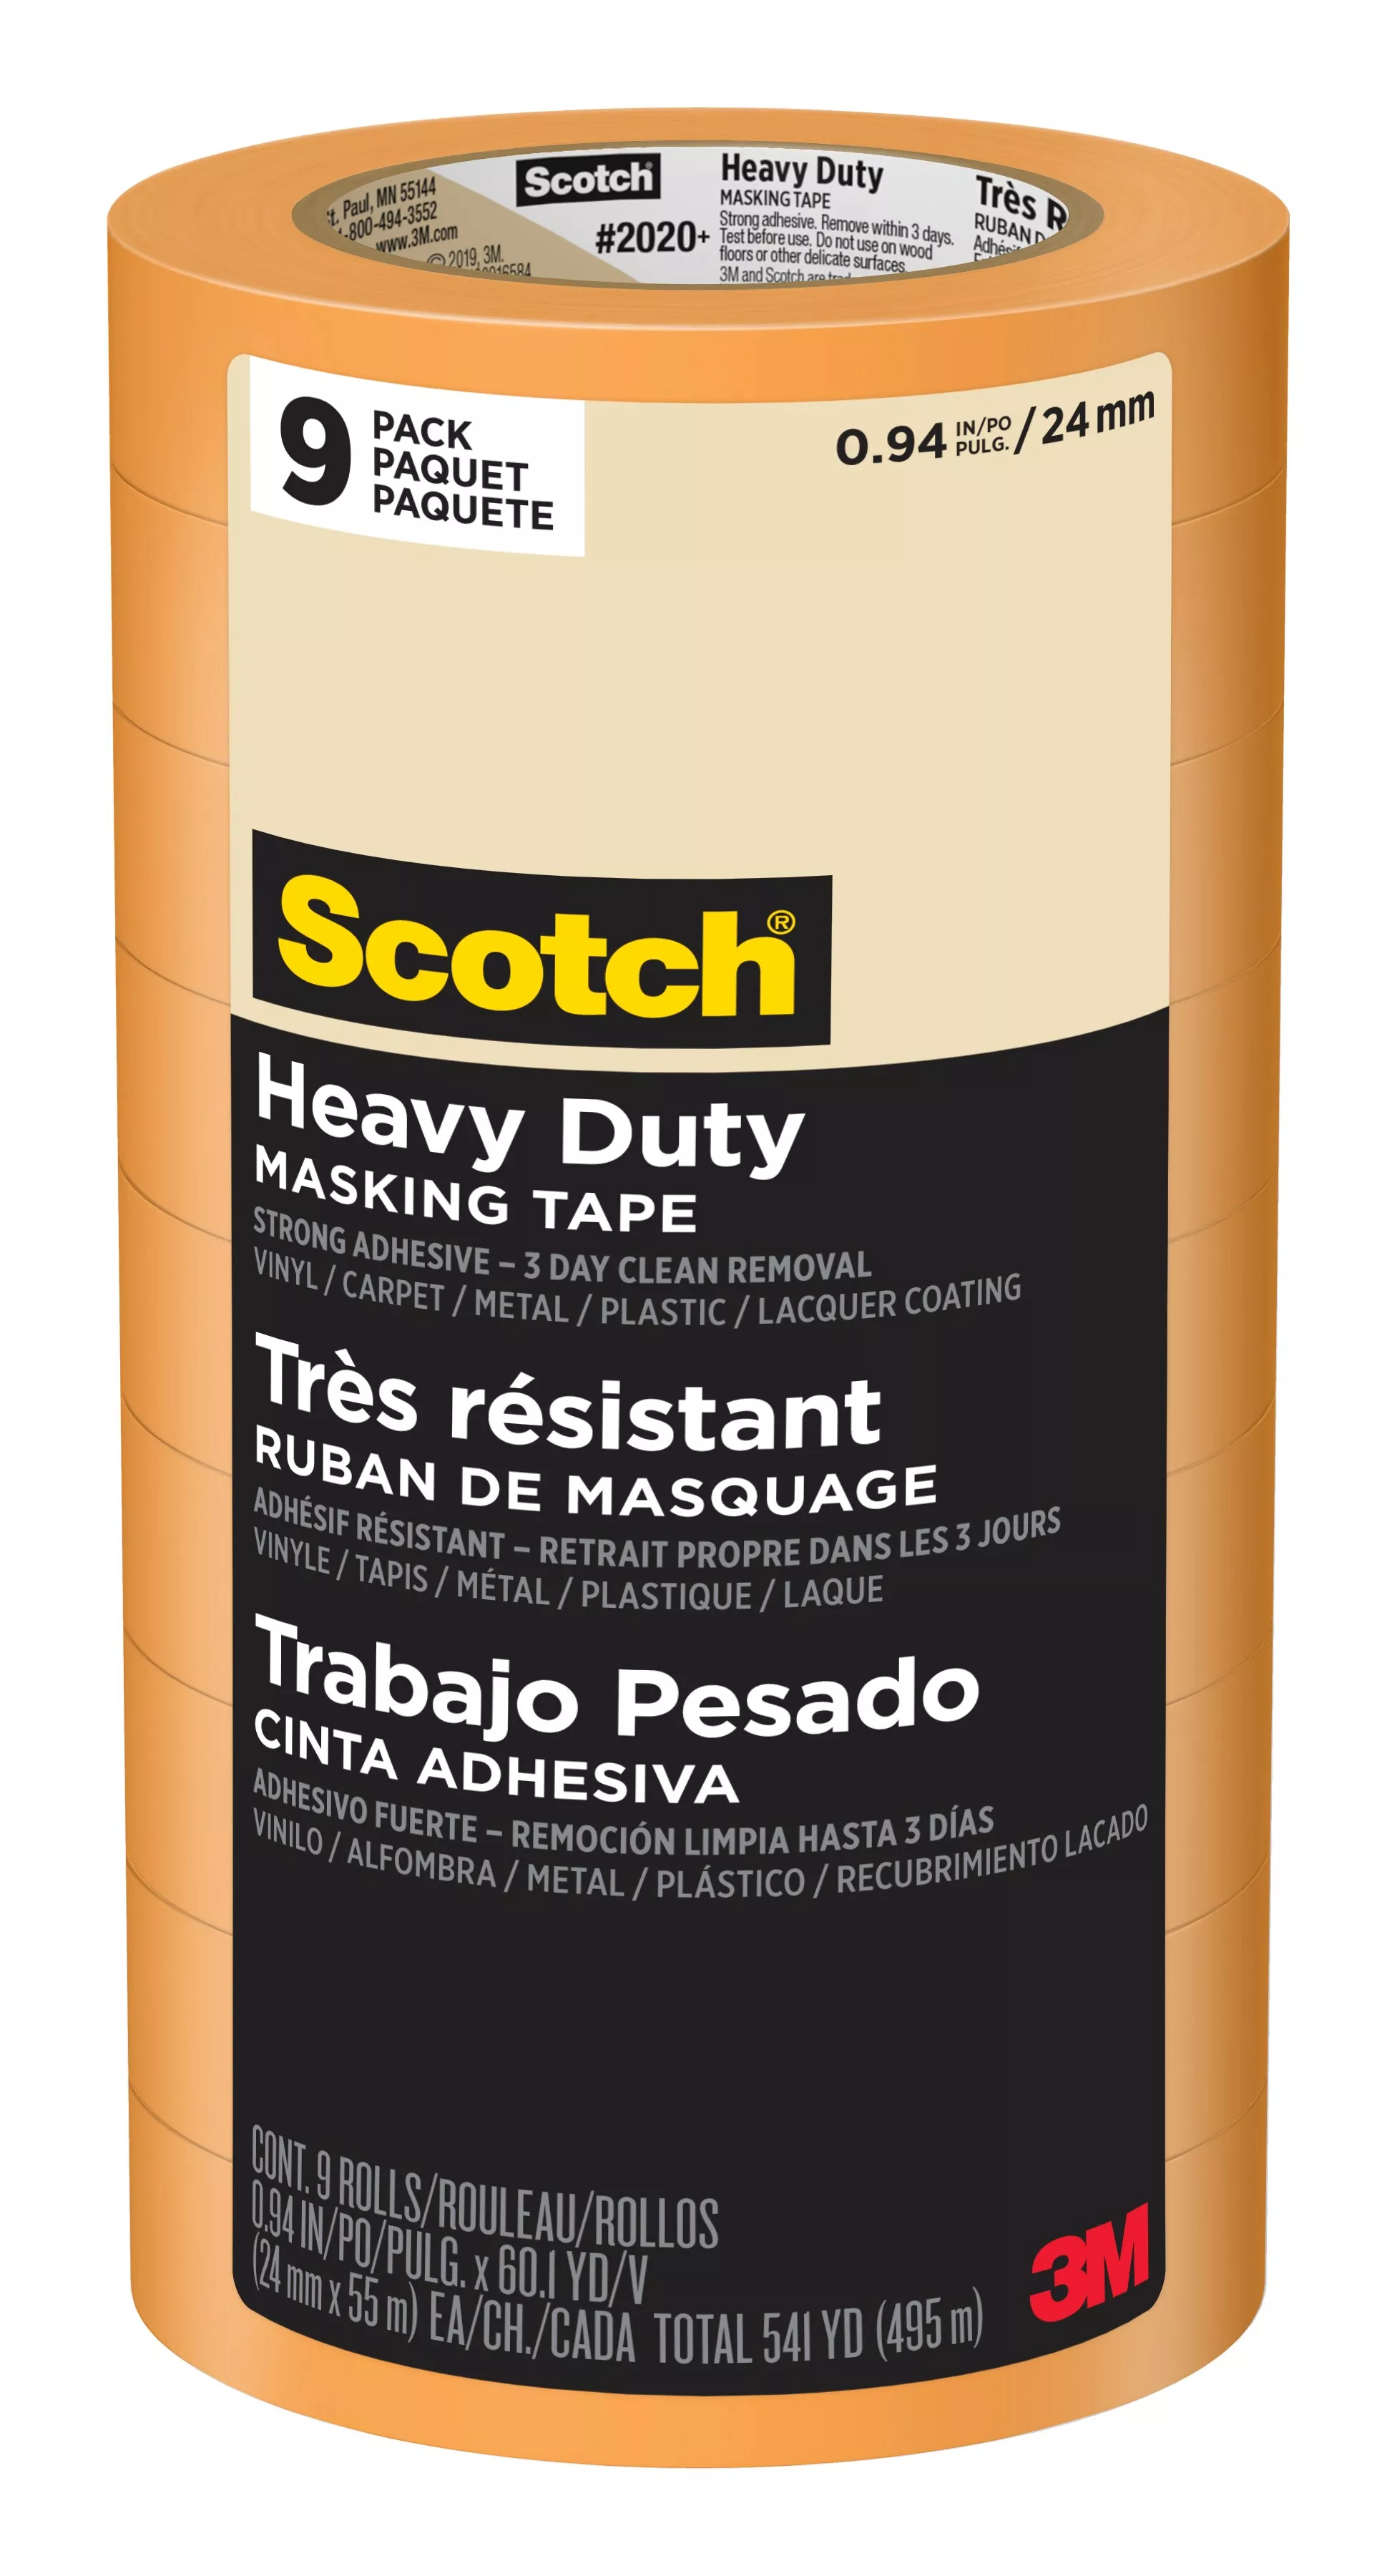 Scotch® Heavy Duty Masking Tape 2020+-24AP9, 0.94 in x 60.1 yd (24mm x
55m), 9 rolls/pack